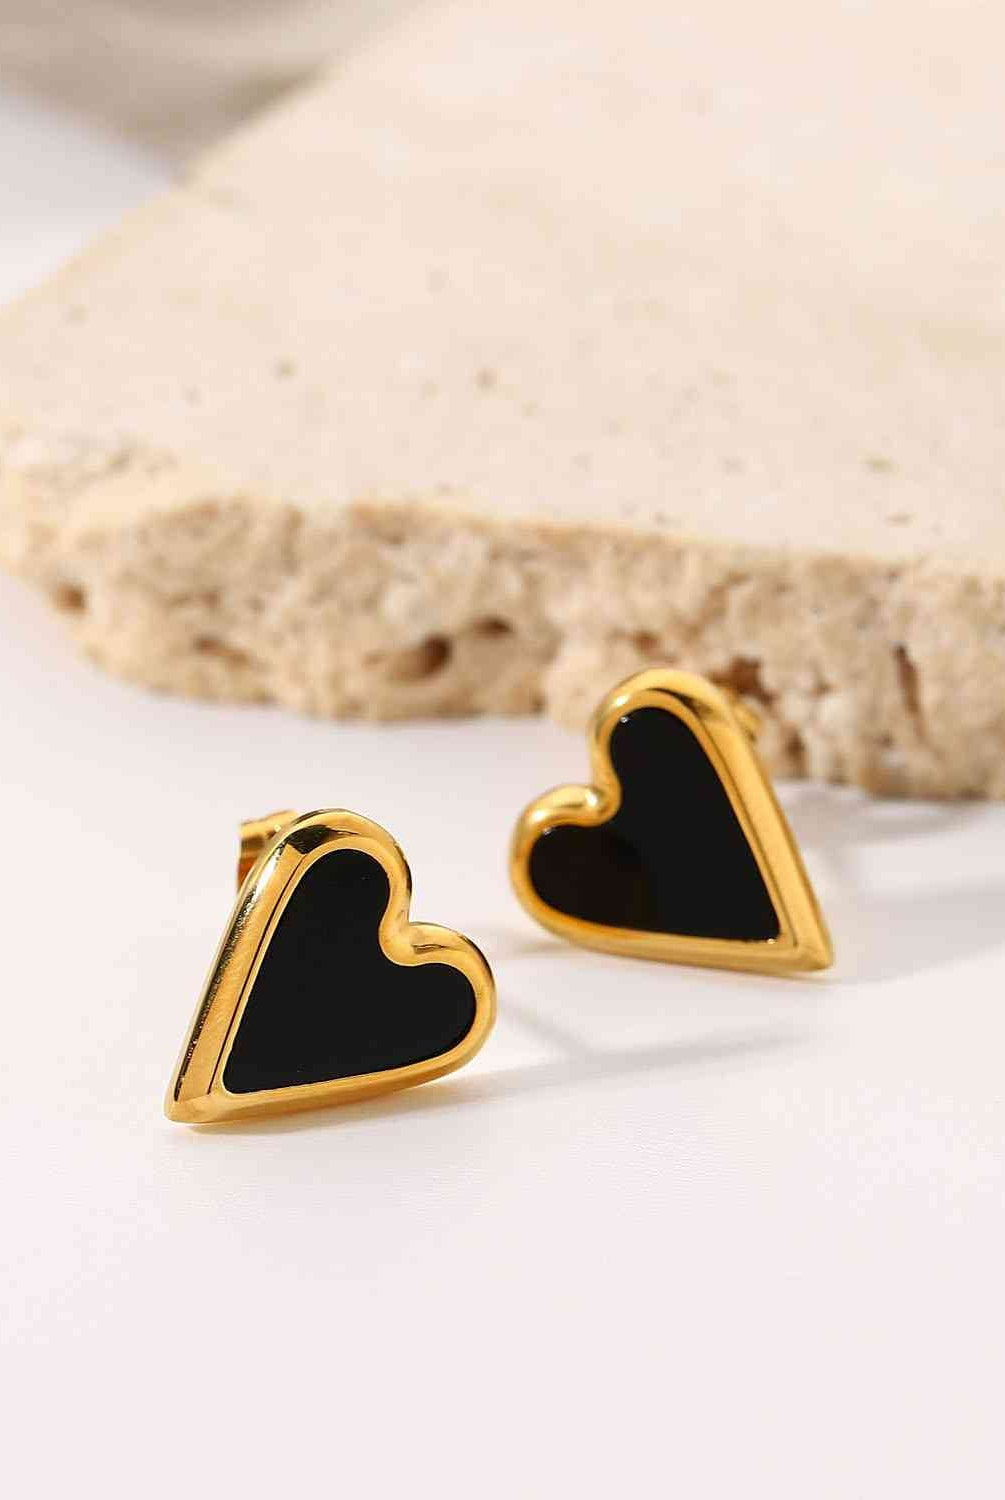 Heart Stainless Steel Stud Earrings - GemThreads Boutique